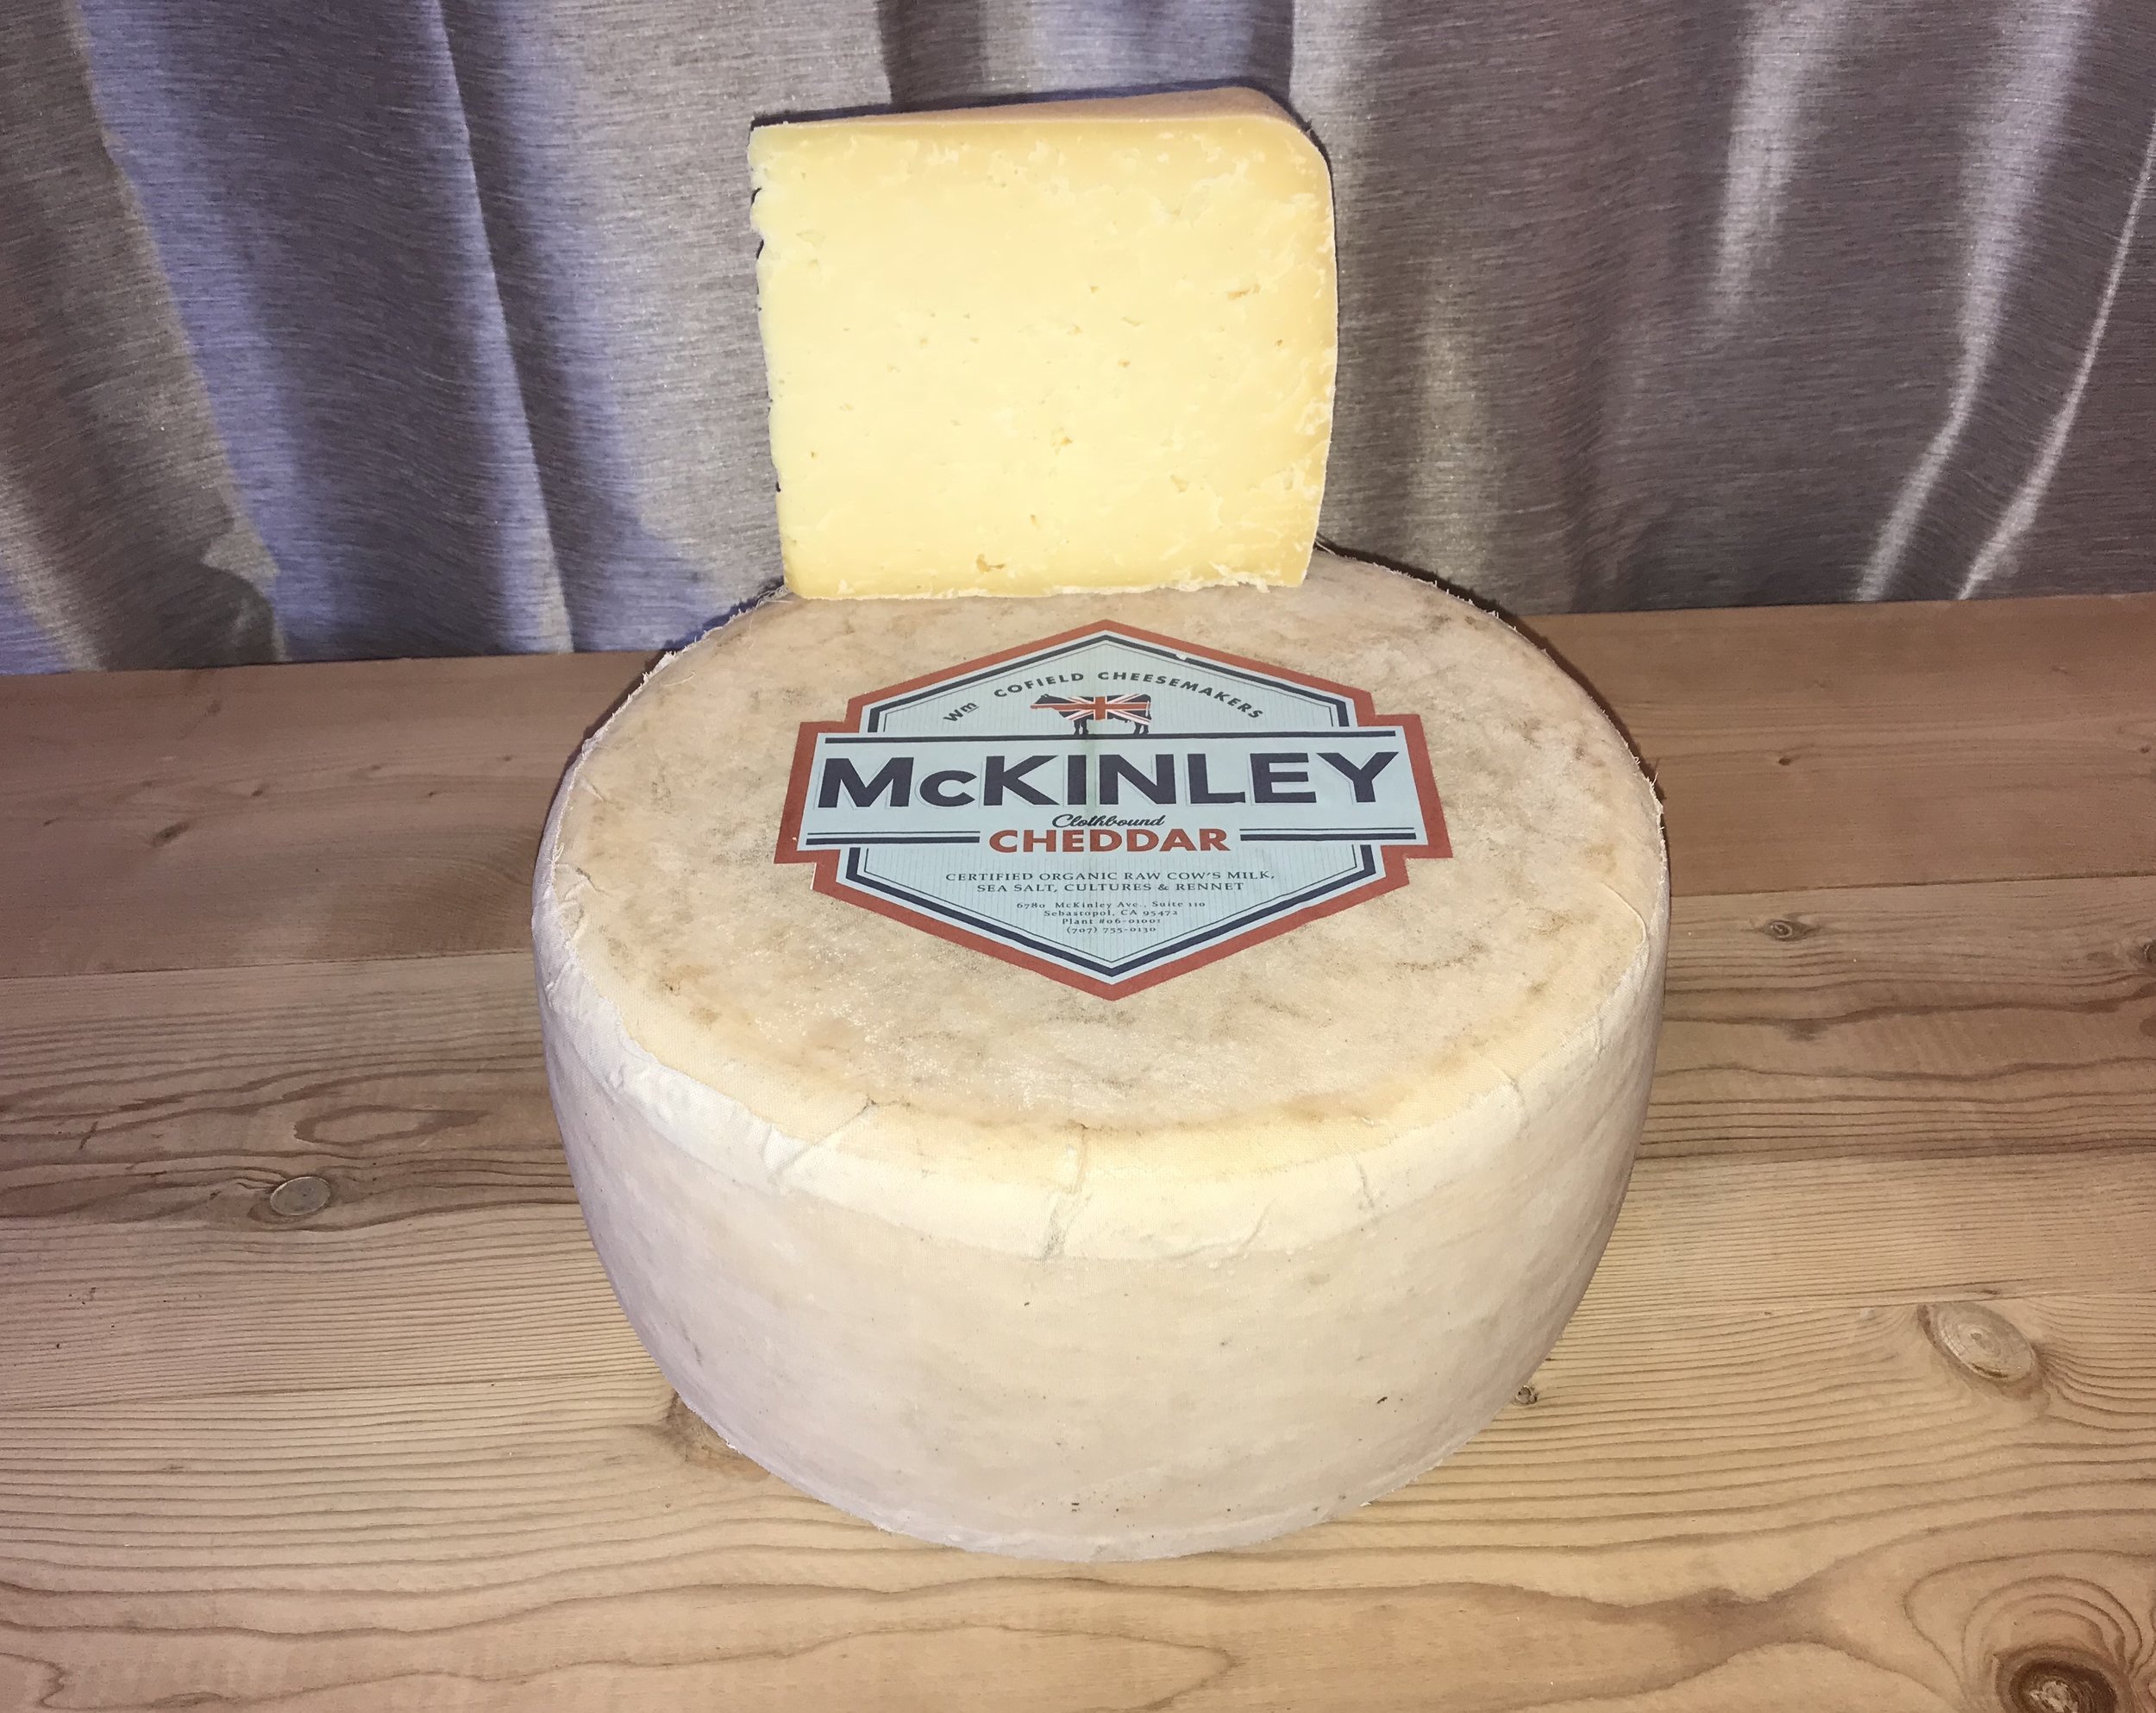 Sebastopol cheesemaker brings British style to Sonoma County